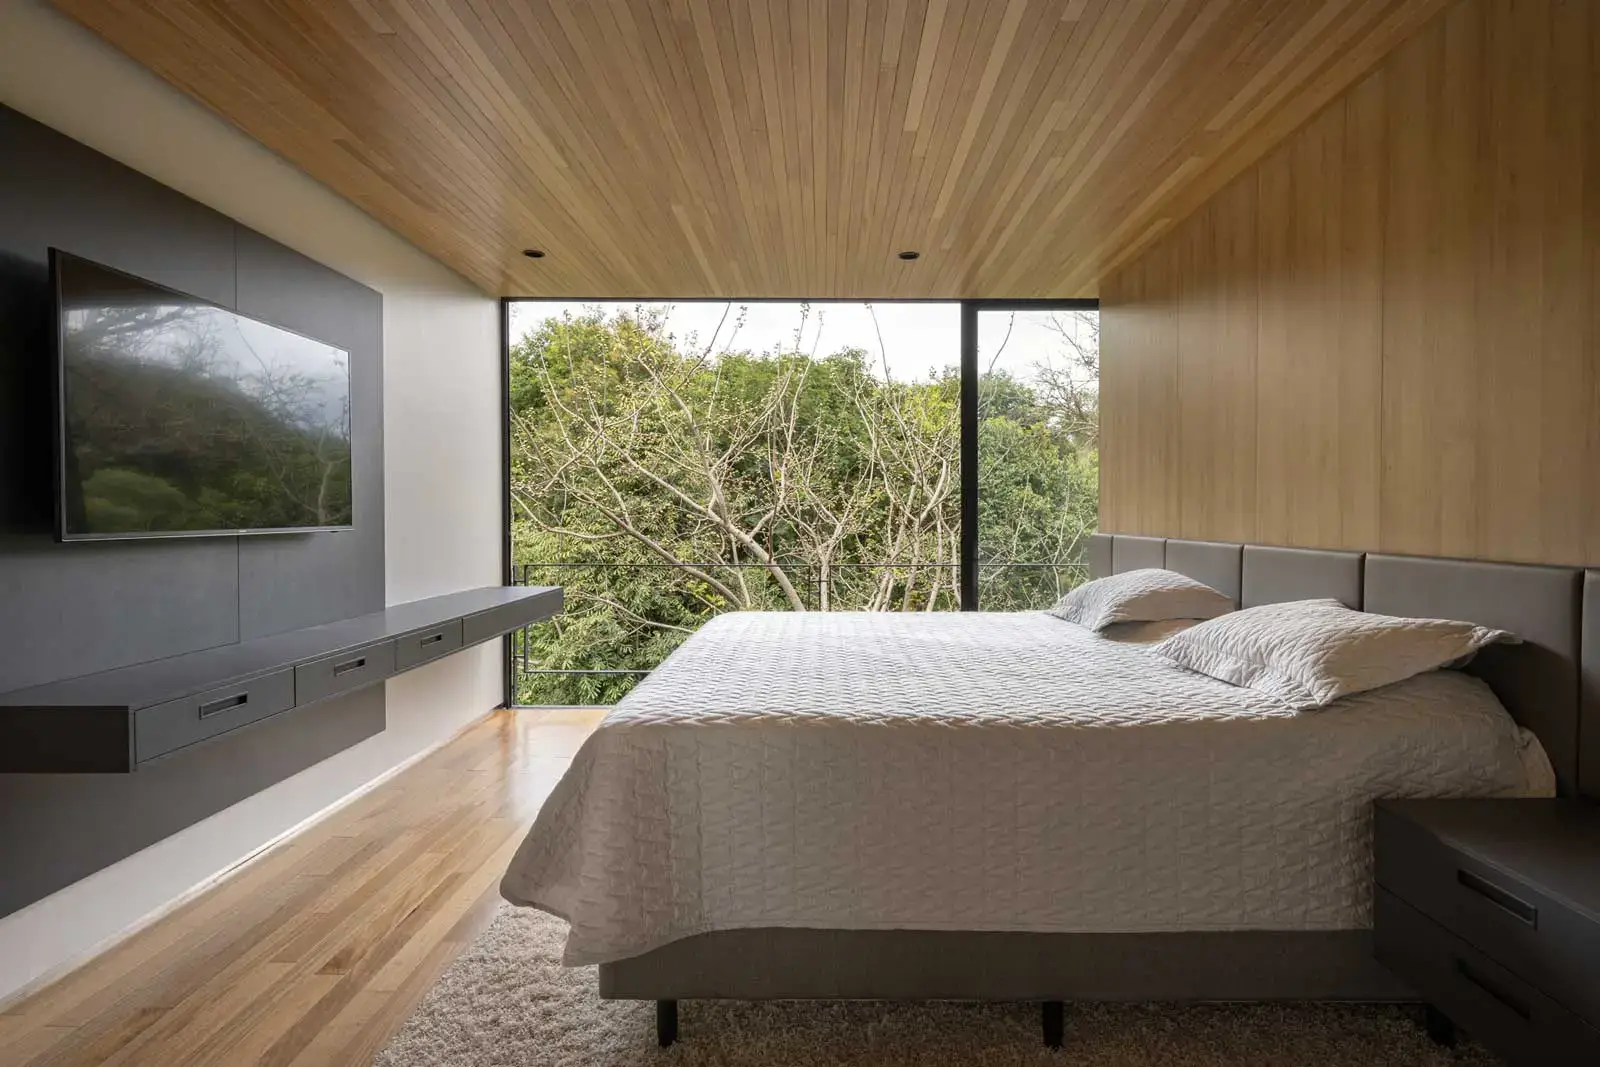 Projeto Sonotto com forro de madeira natural Tauari e piso de madeira